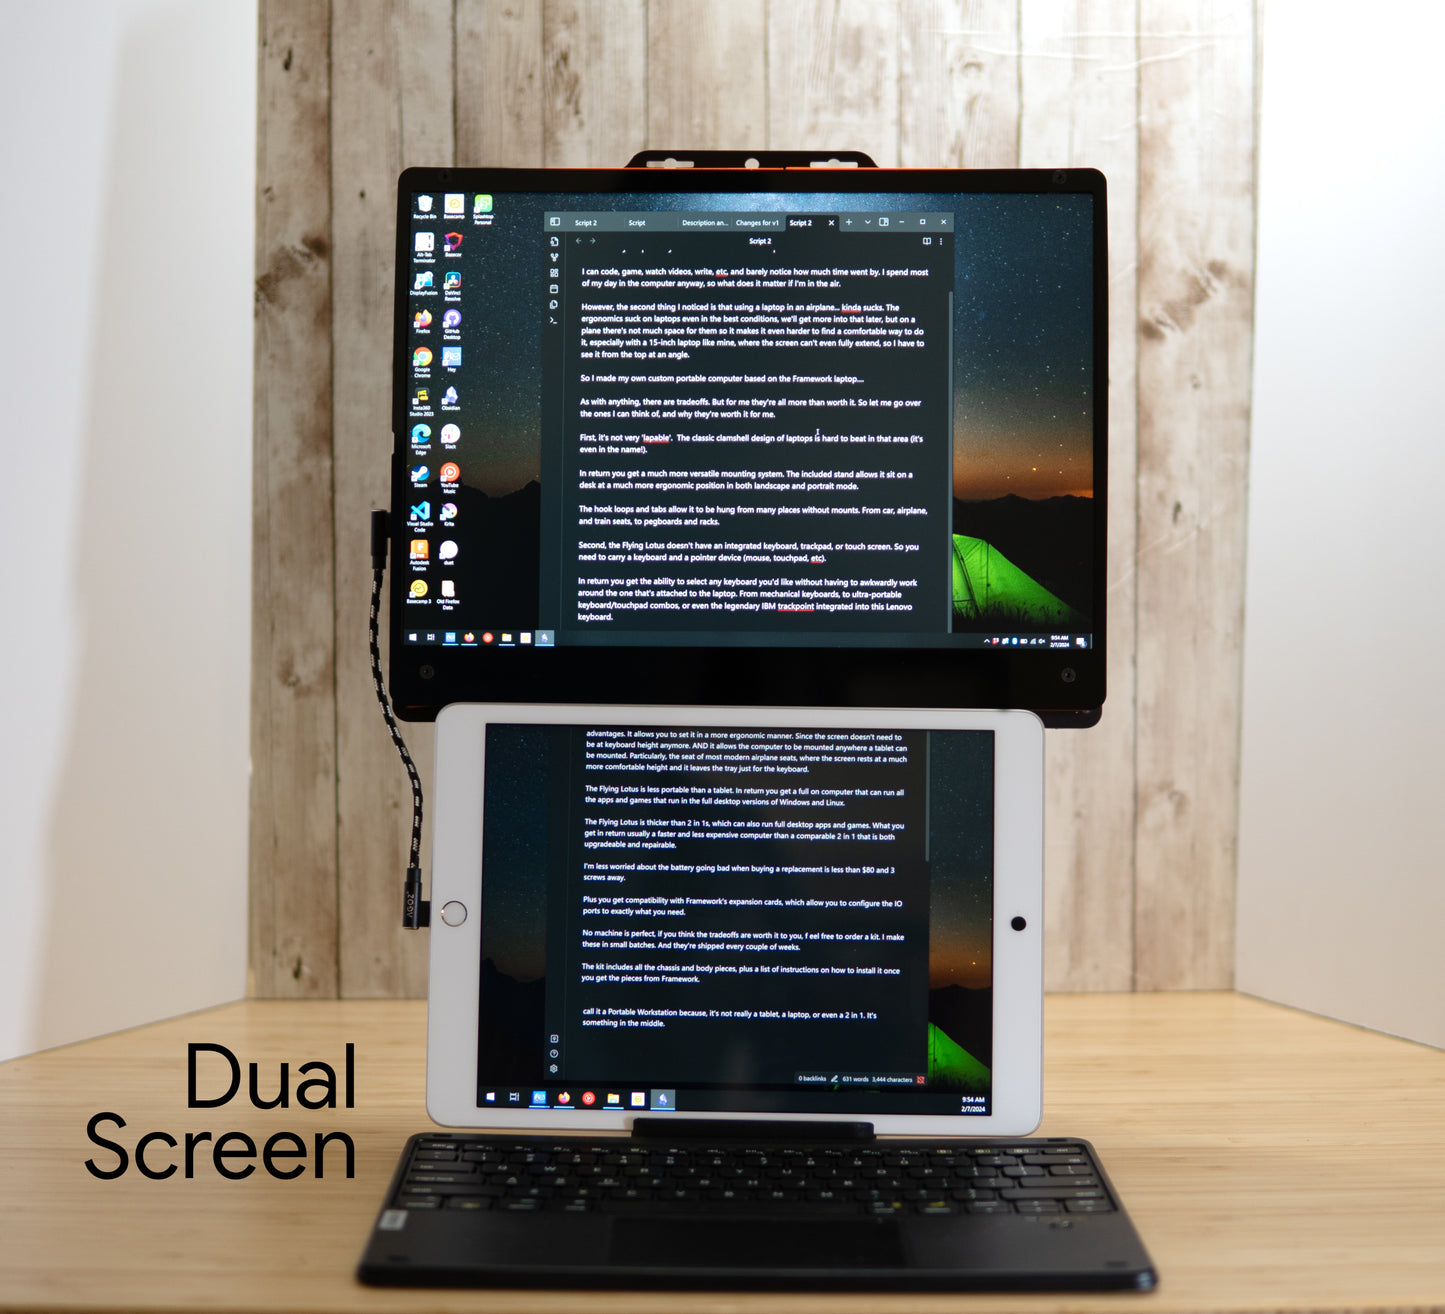 Dual screen with an iPad (using Duet Display)